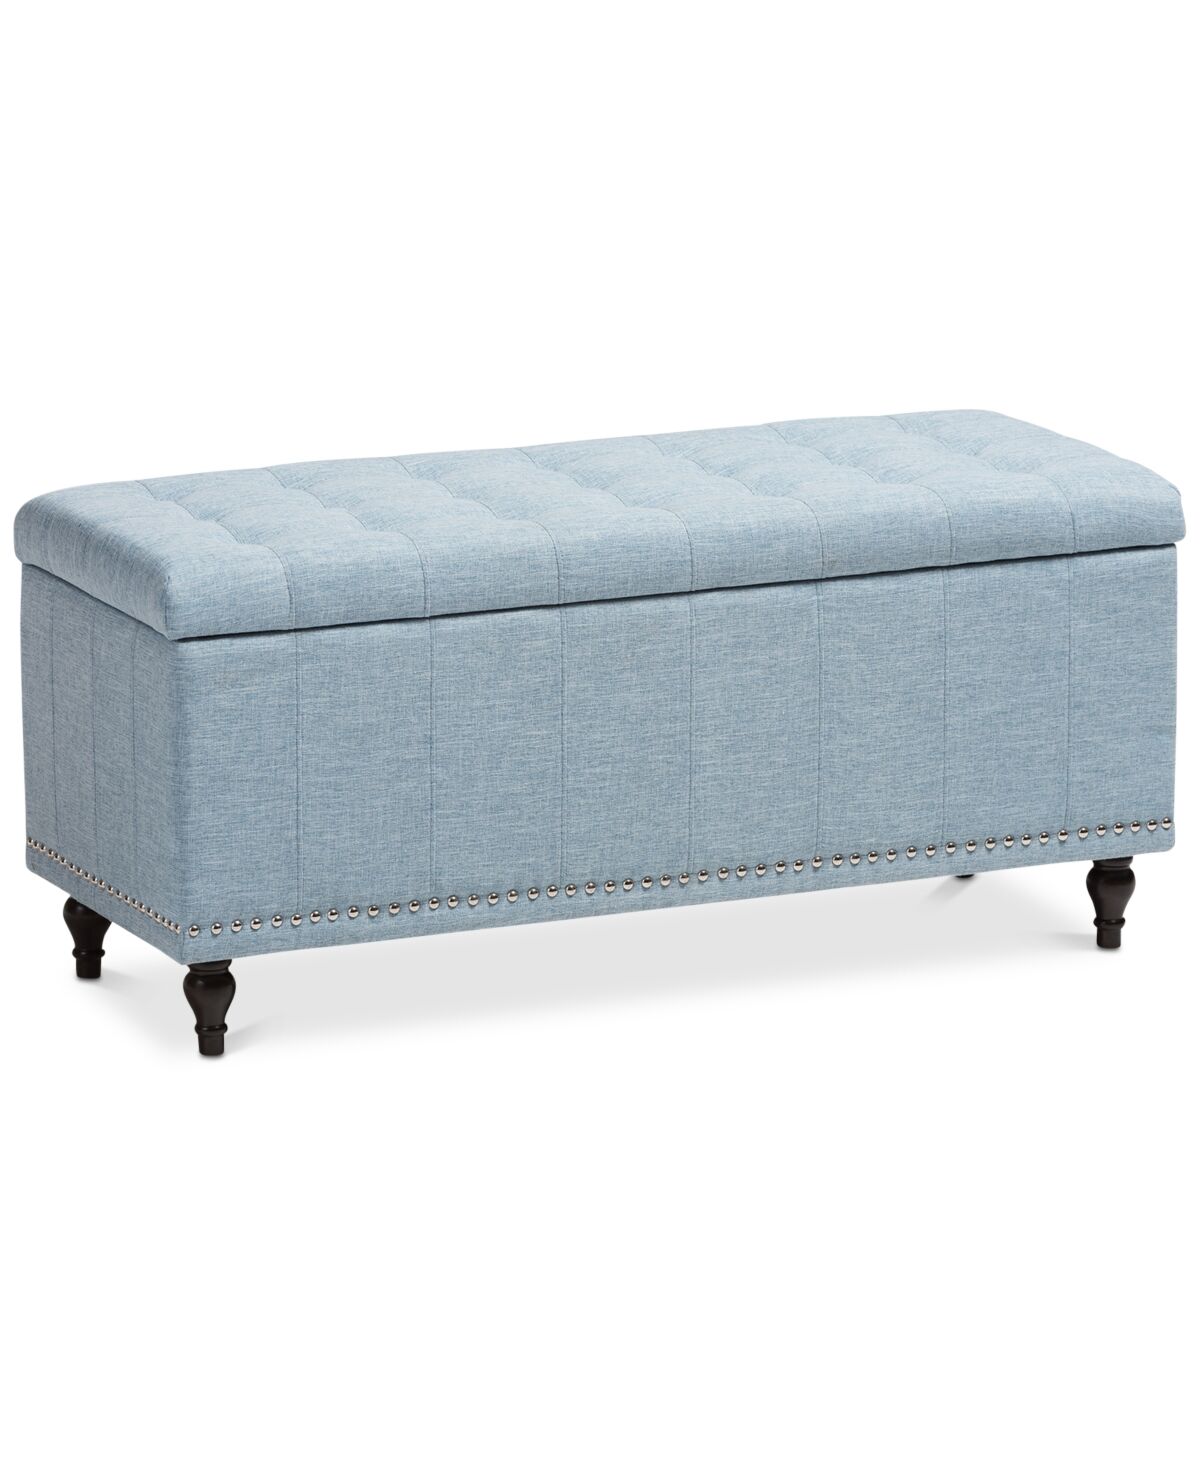 Furniture Kaylee Button-Tufted Storage Ottoman Bench - Light Blue